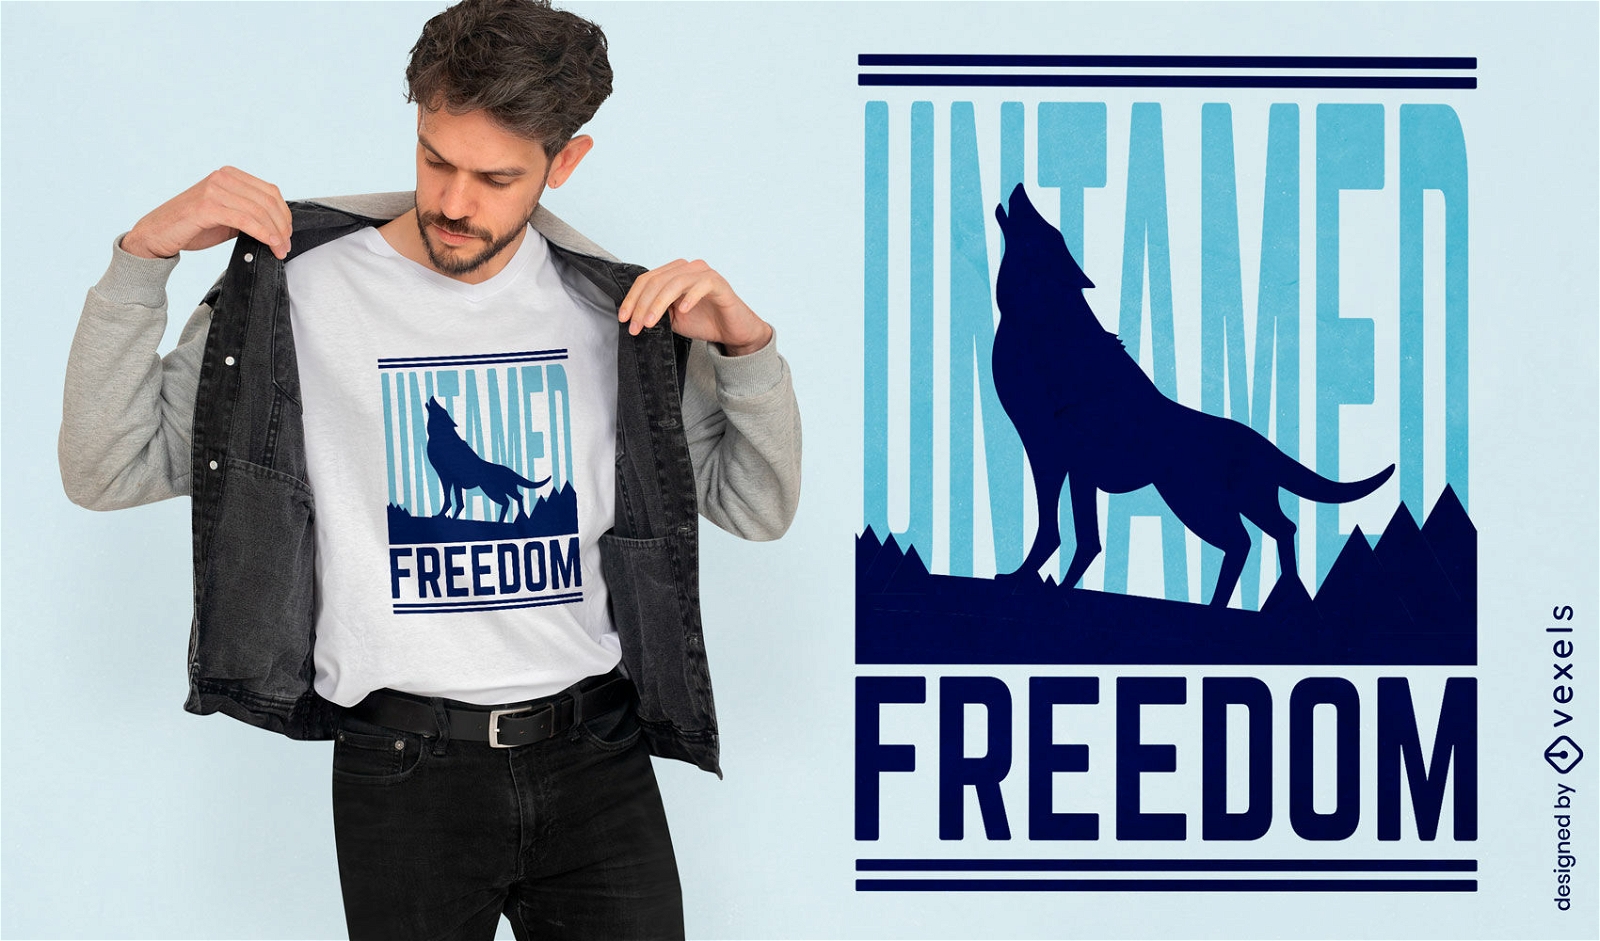 Untamed freedom t-shirt design